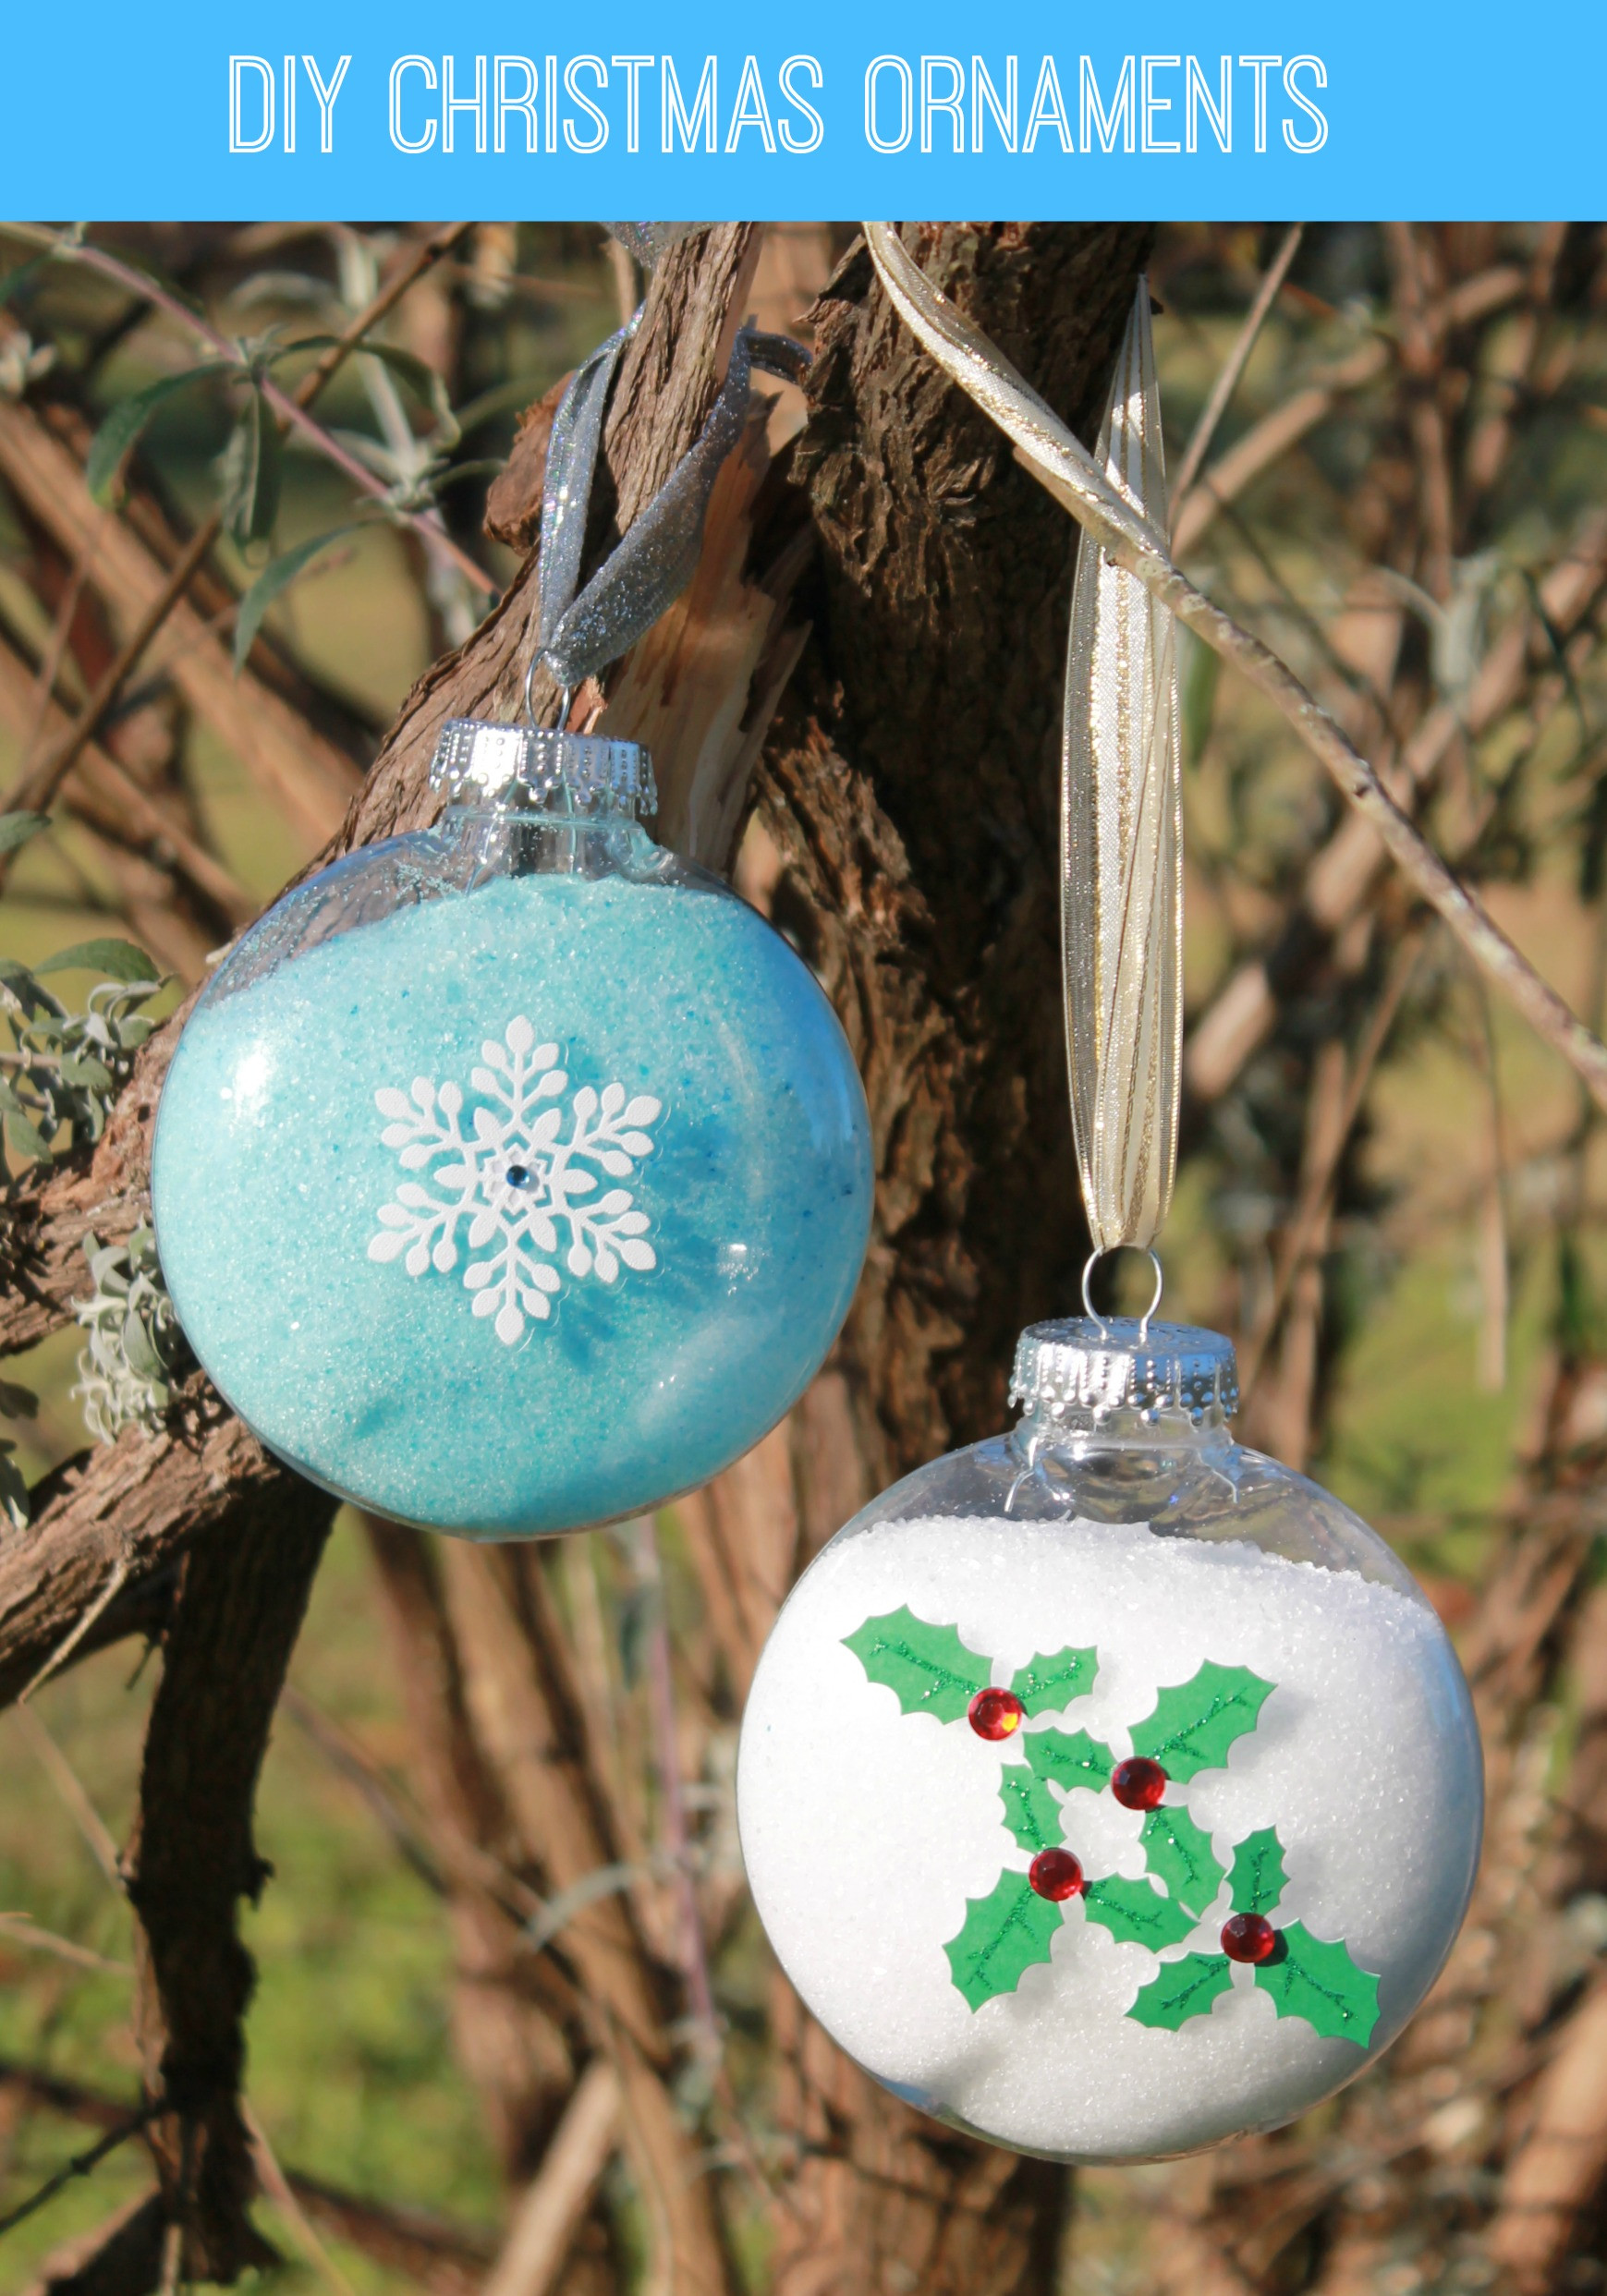 DIY Photo Christmas Ornament
 Easy DIY Snowflake Christmas Ornament